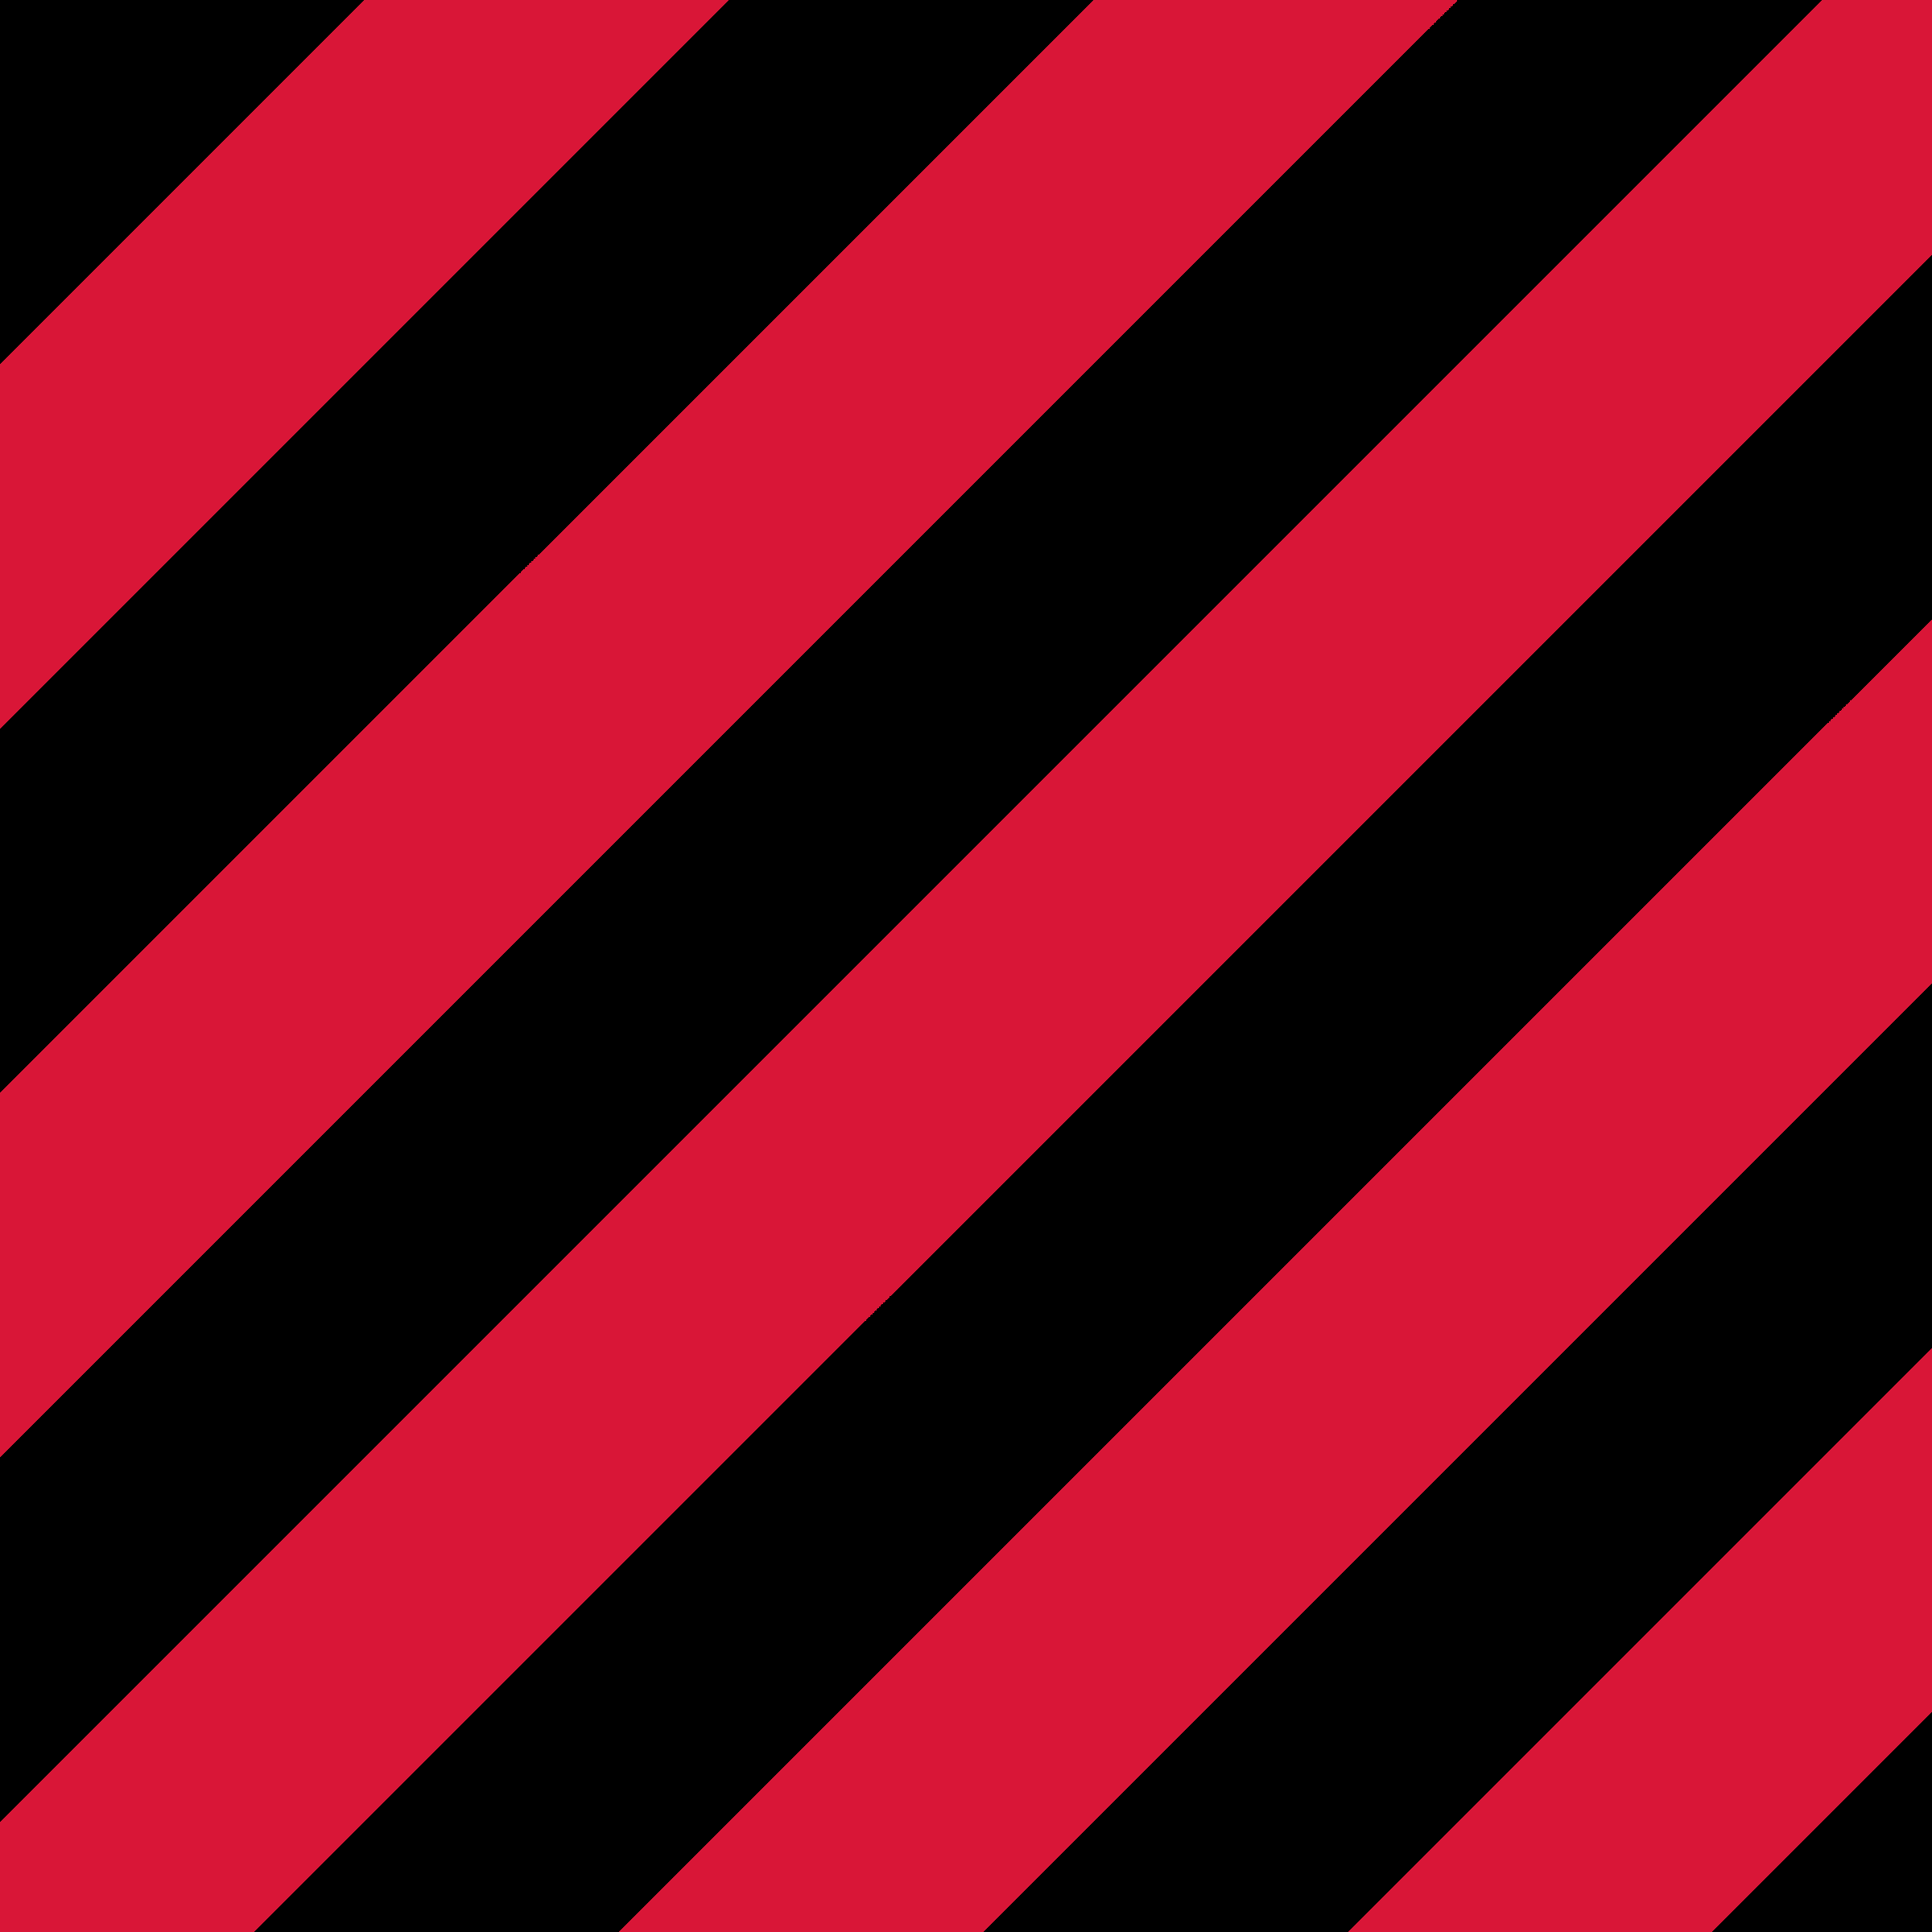 Red Black Stripe  Gradient  By Ryanlerch